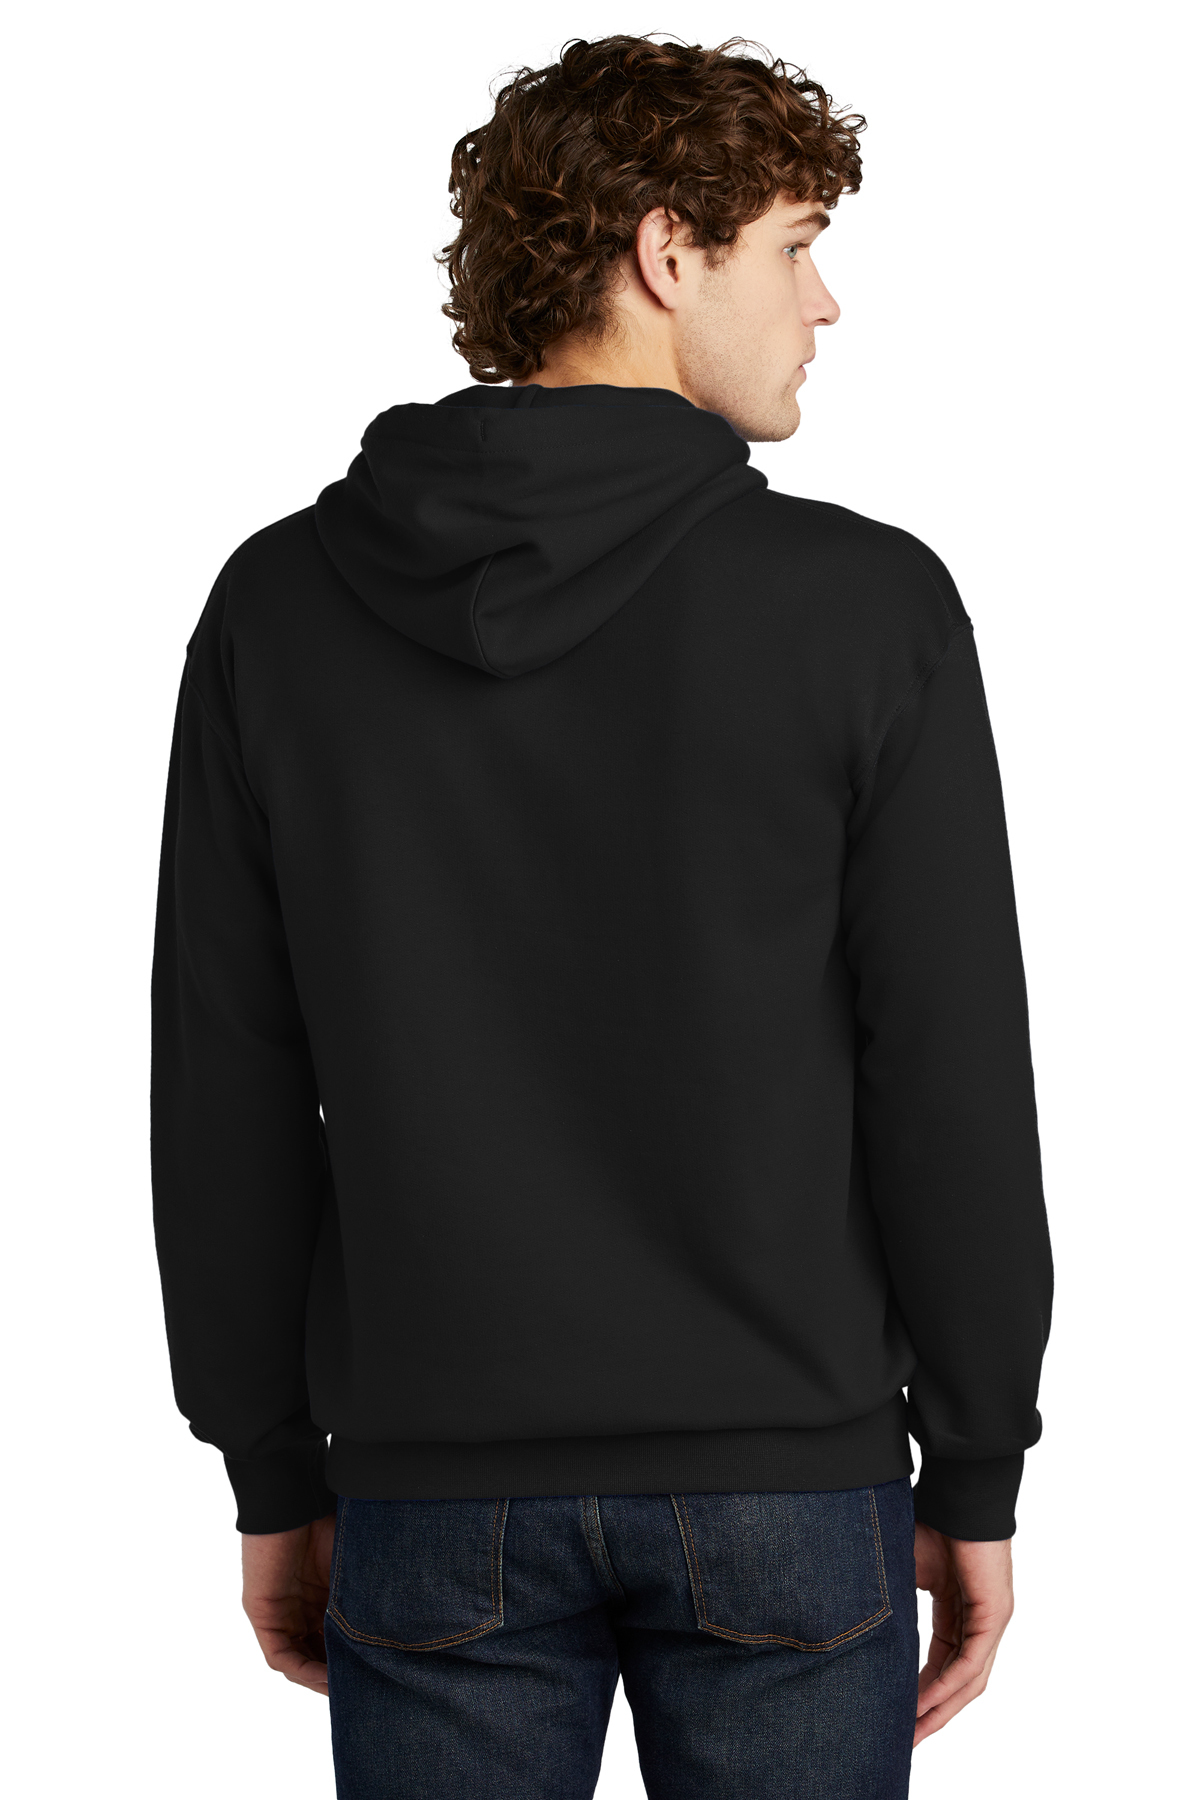 Port & Company Fleece Pullover Hooded Sweatshirt | Product | Port & Company